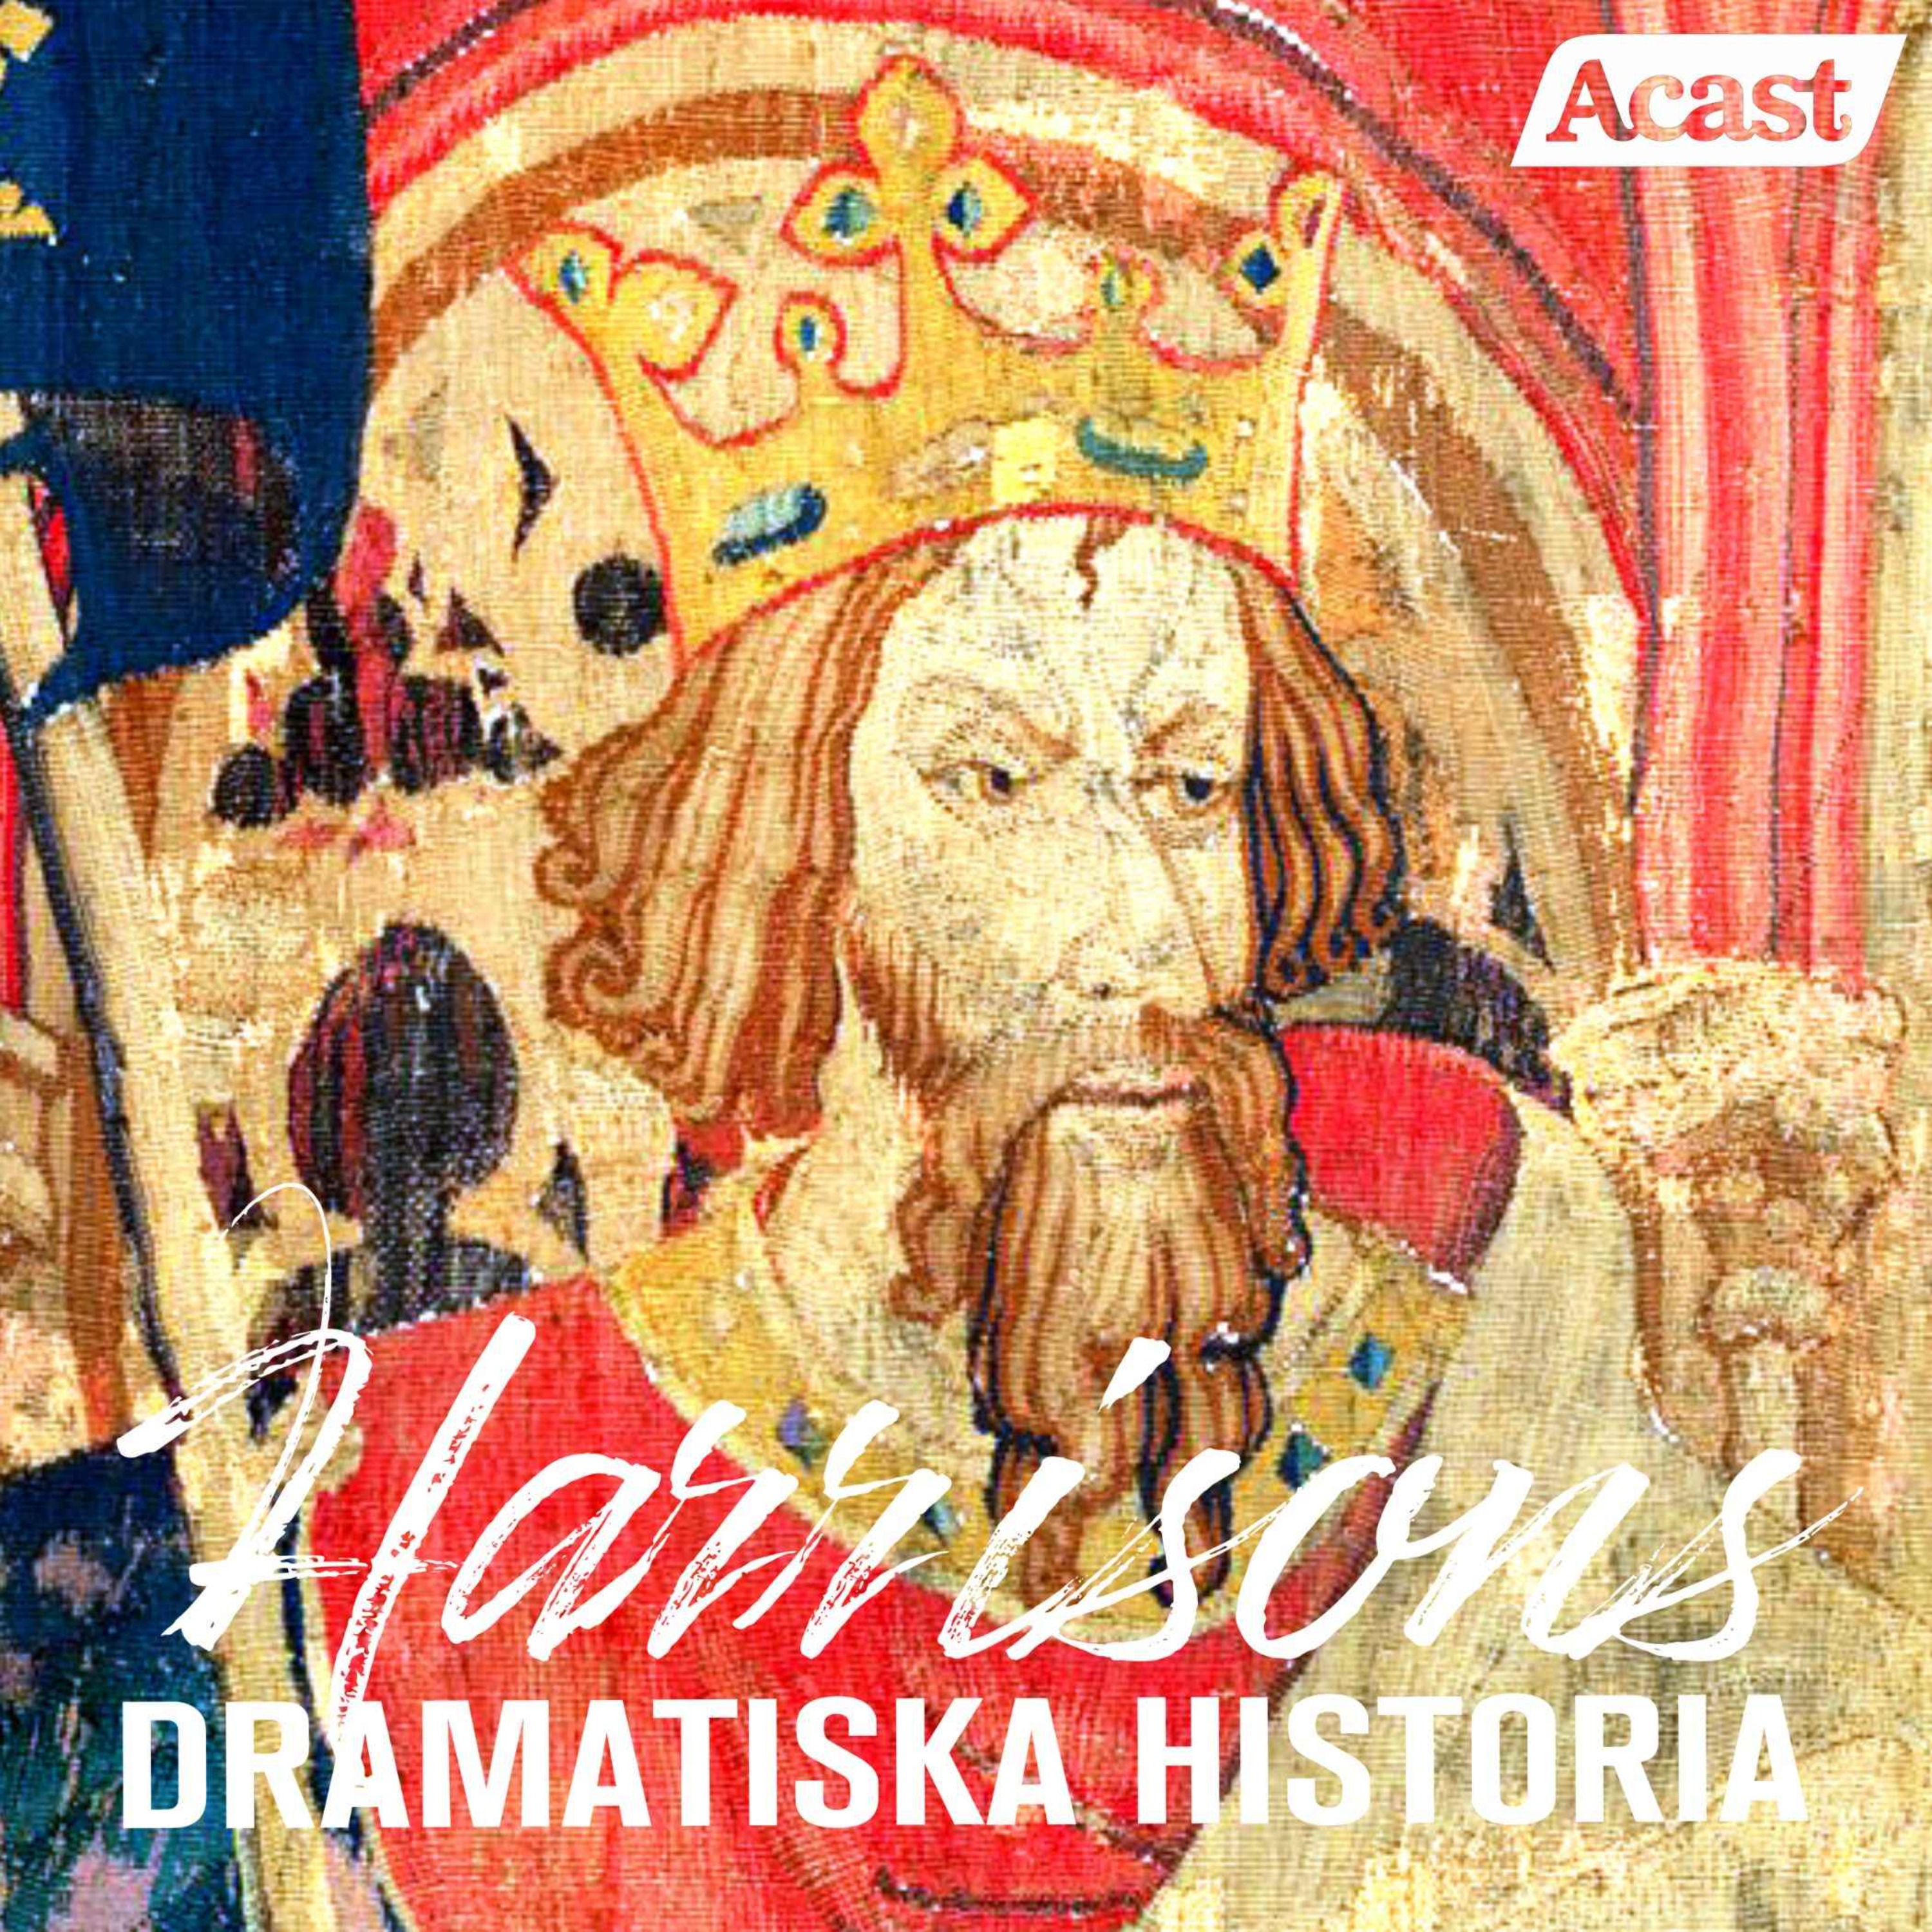 cover art for Kung Artur – monarken som aldrig fanns